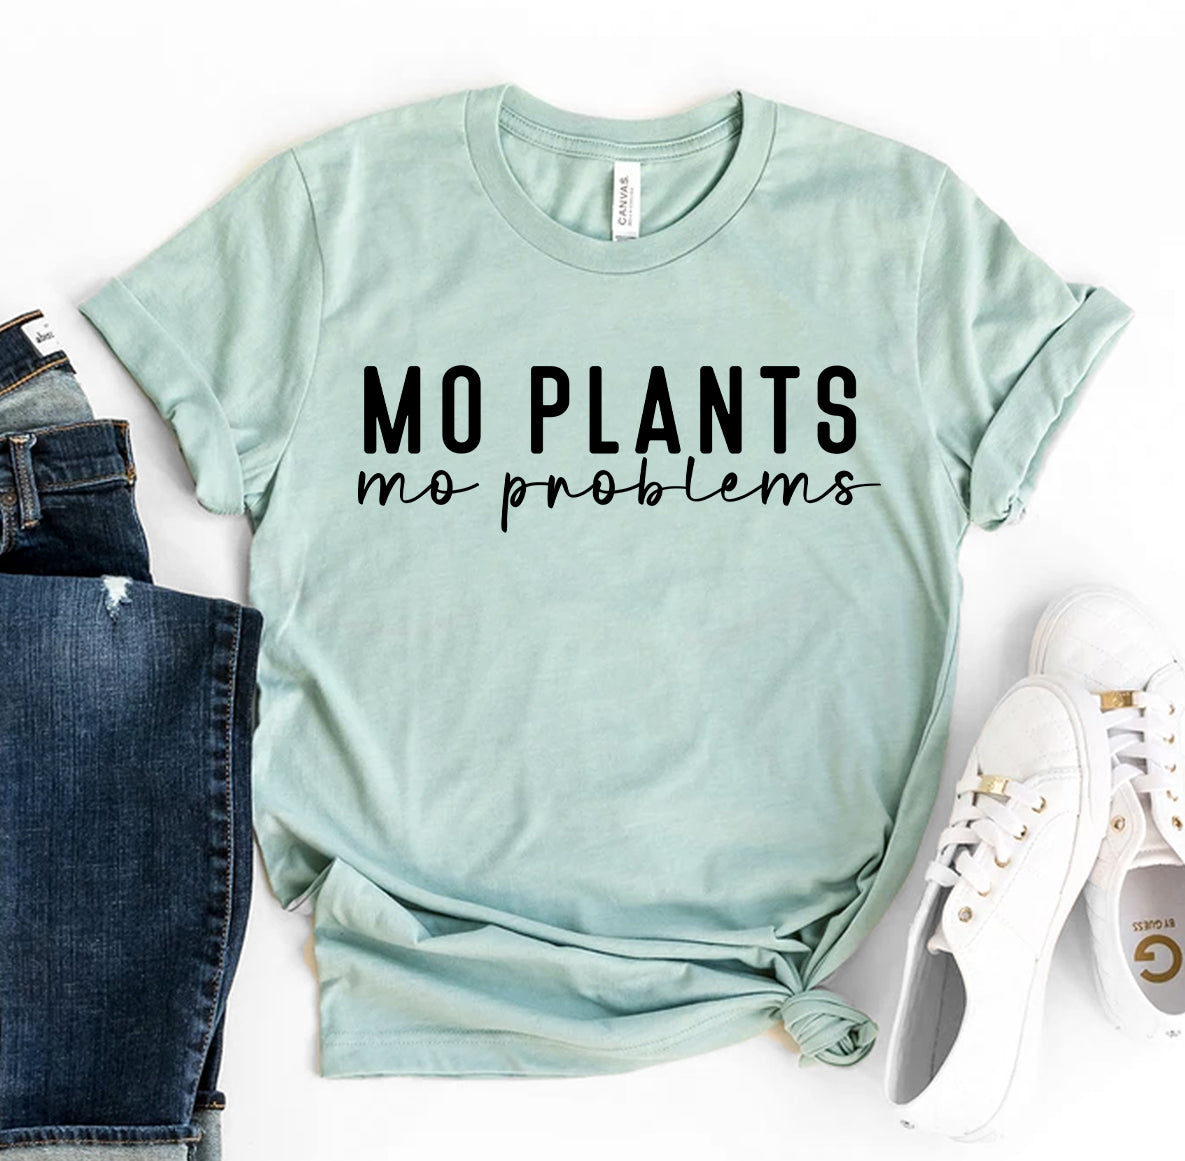 Mo Plants Mo Problems T-shirt